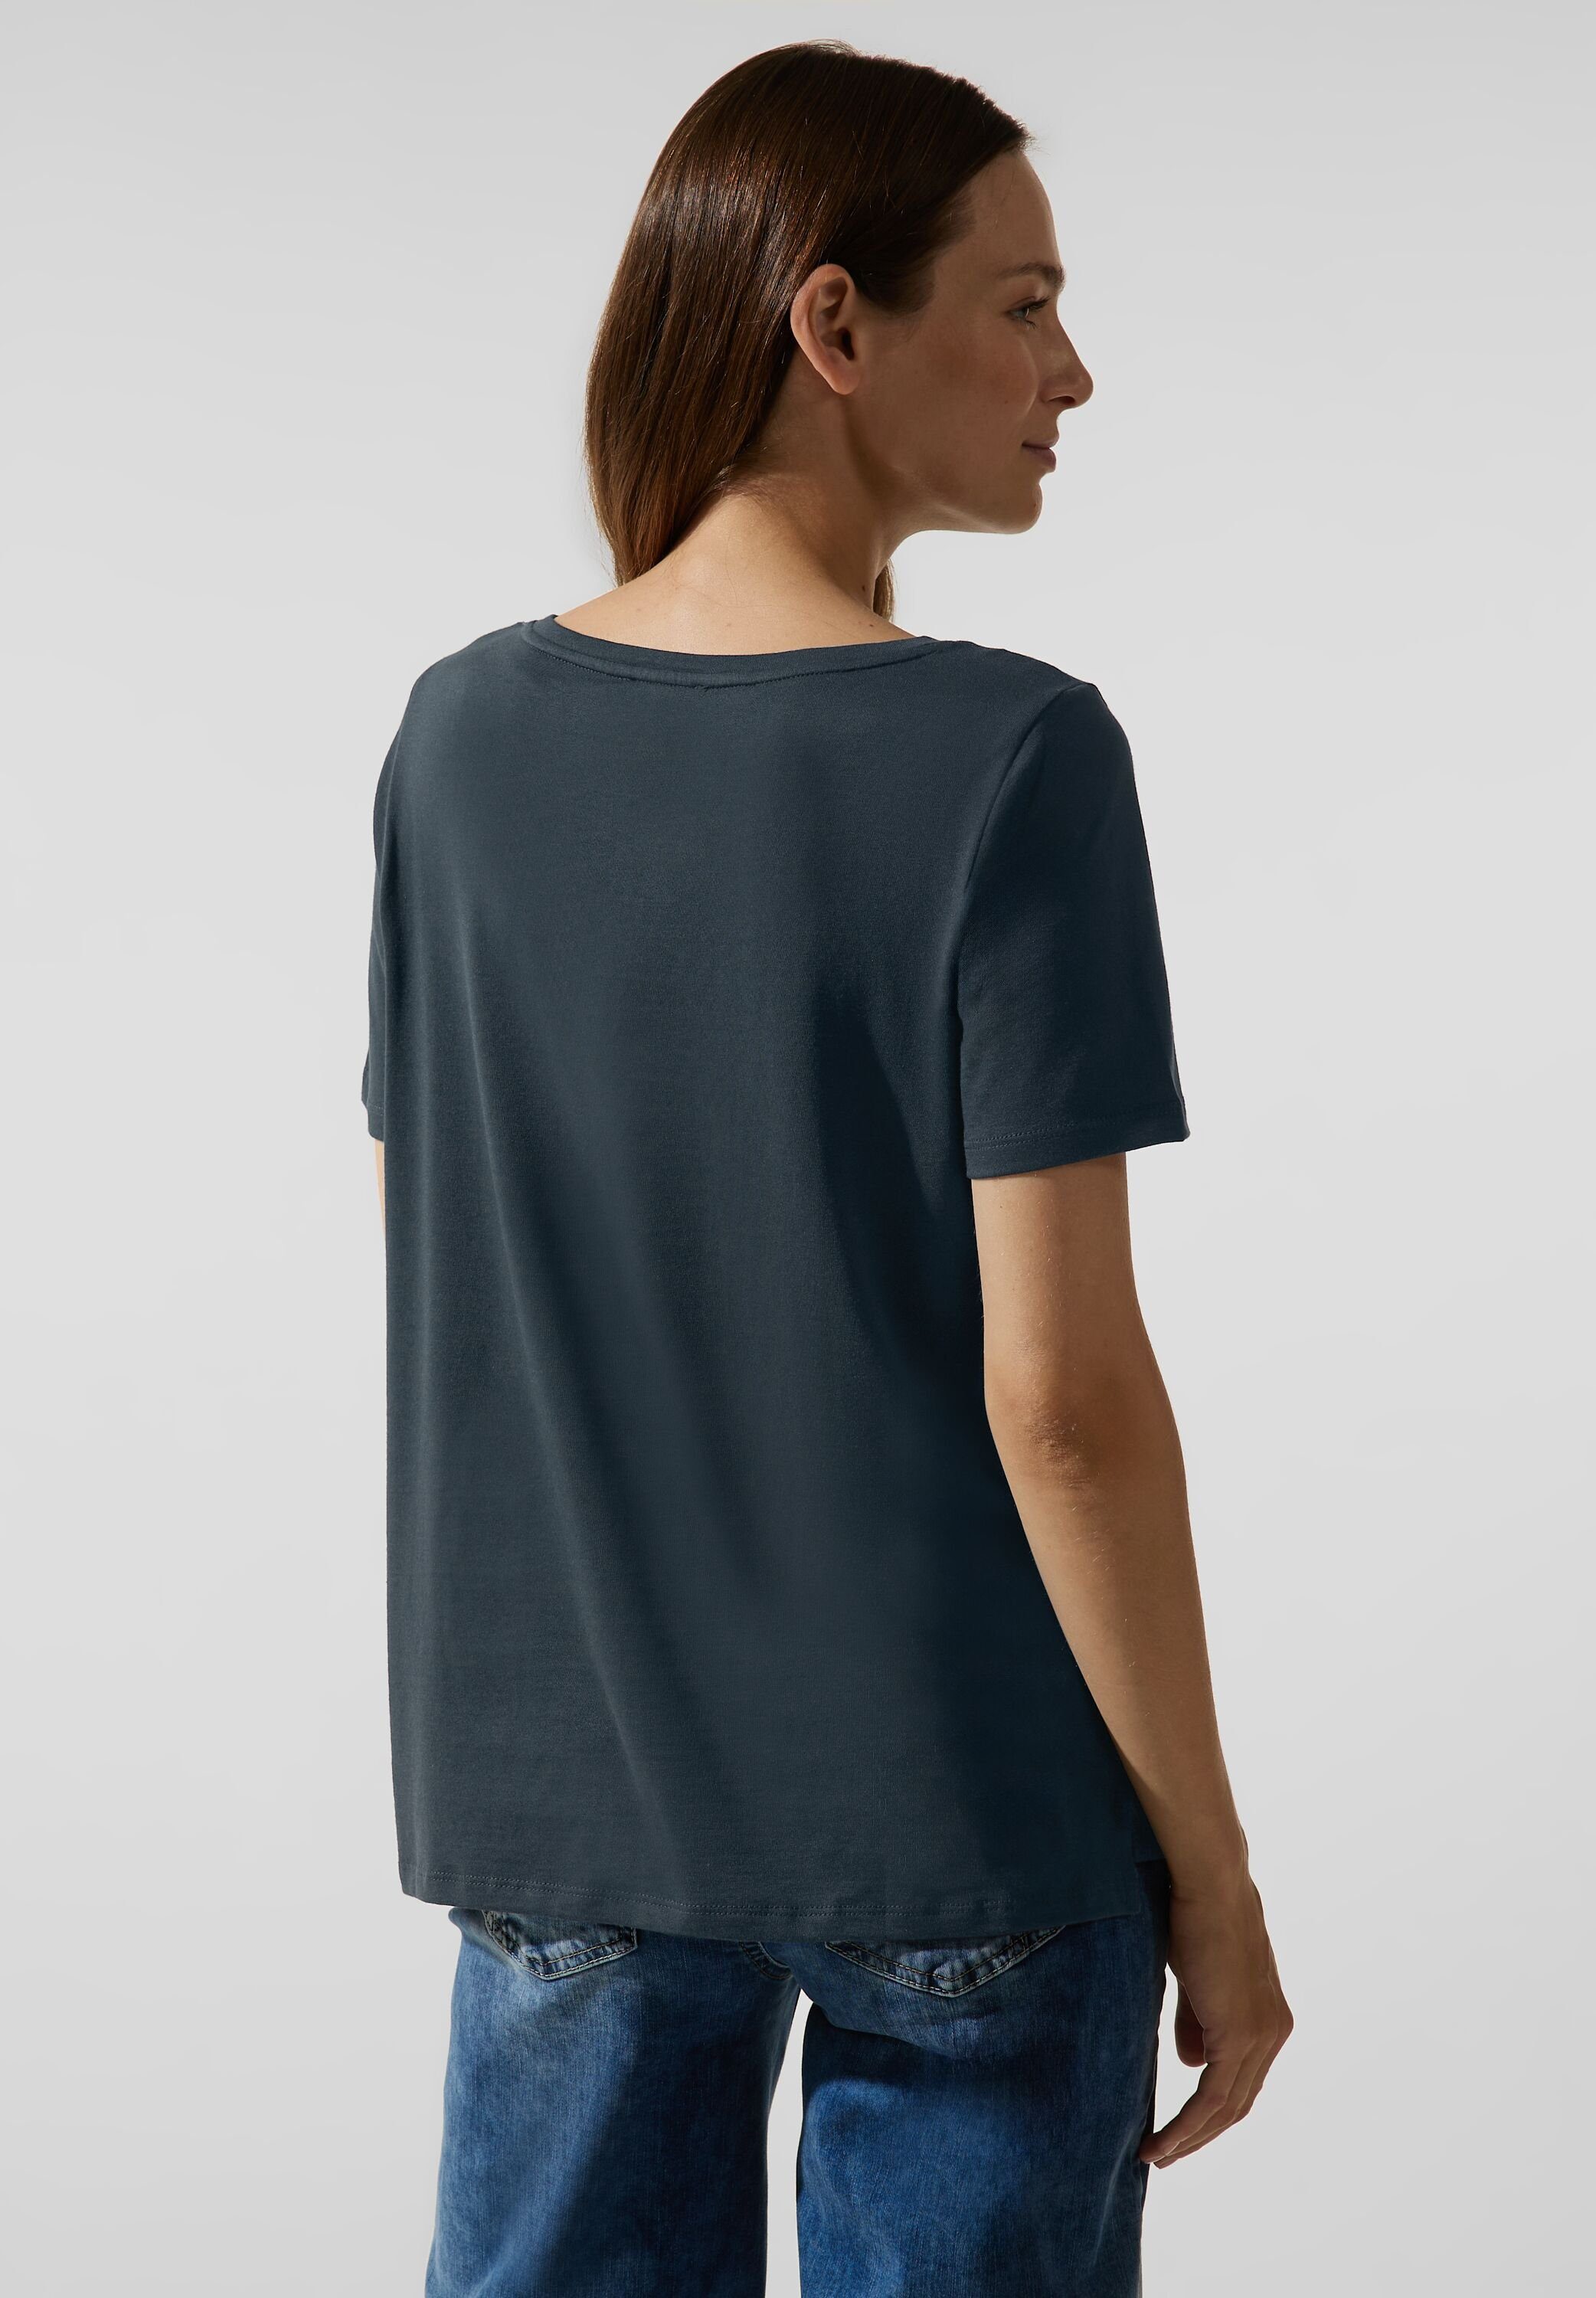 ONE Folienprint in STREET T-Shirt Unifarbe,